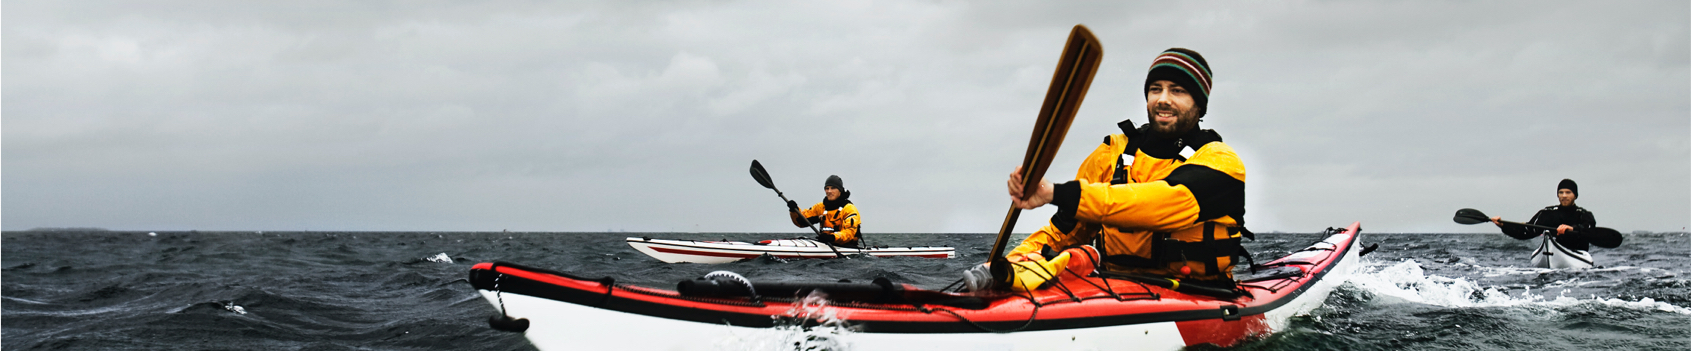 Sea kayak expedition